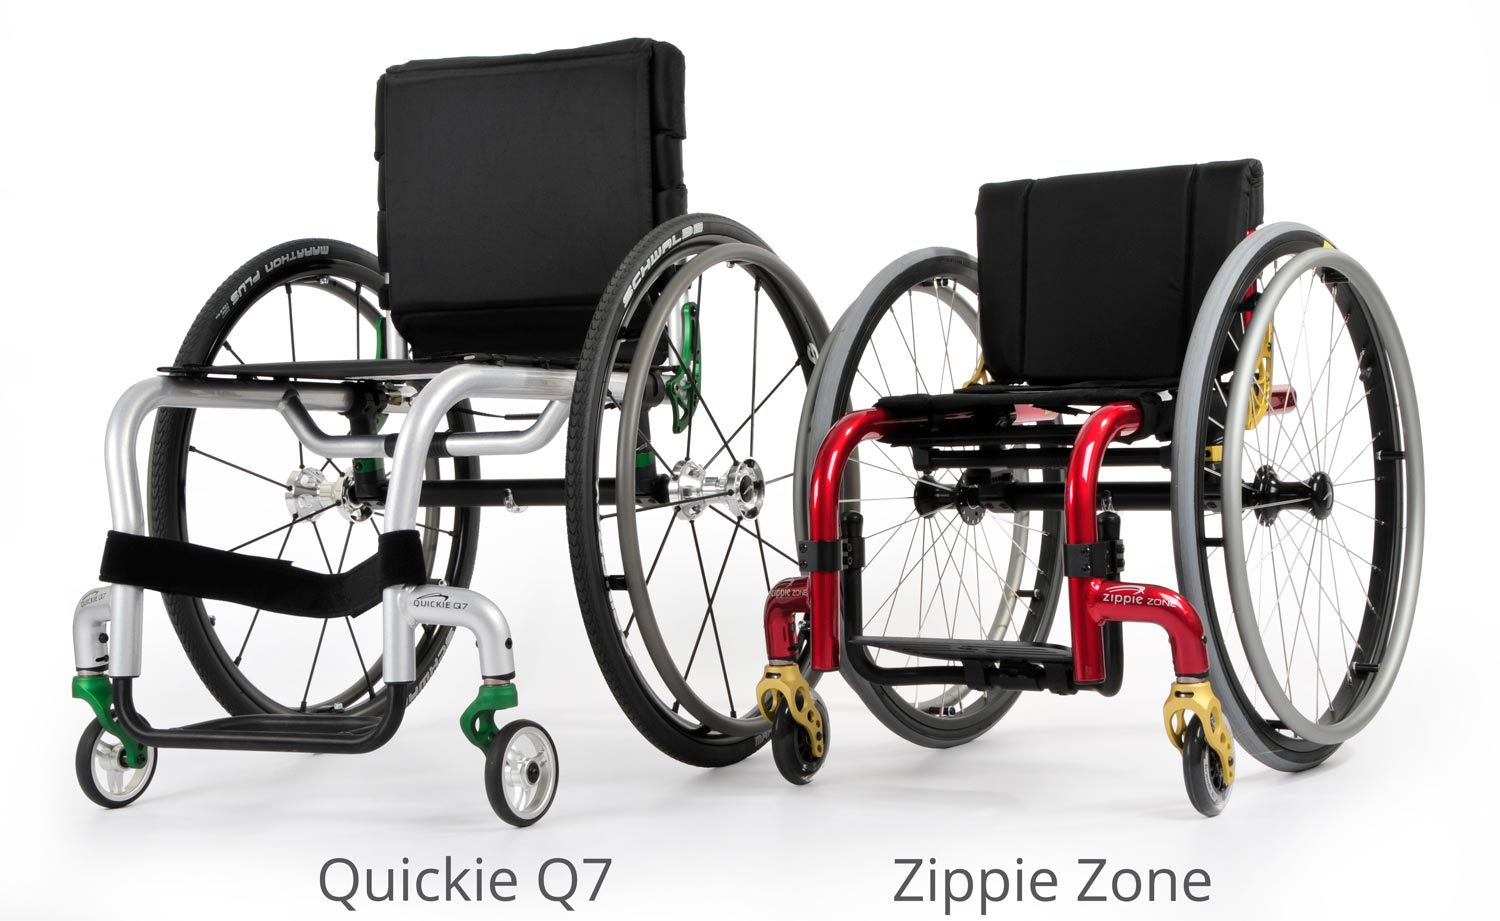 https://www.sunrisemedical.com/getattachment/manual-wheelchairs/Zippie/rigid-wheelchairs/Zone/Product-Features/1-Design-Fit-for-Kids/Zippie_Zone_Feature2size.jpg.aspx?lang=en-US&width=1500&height=921&ext=.jpg%}?width=960